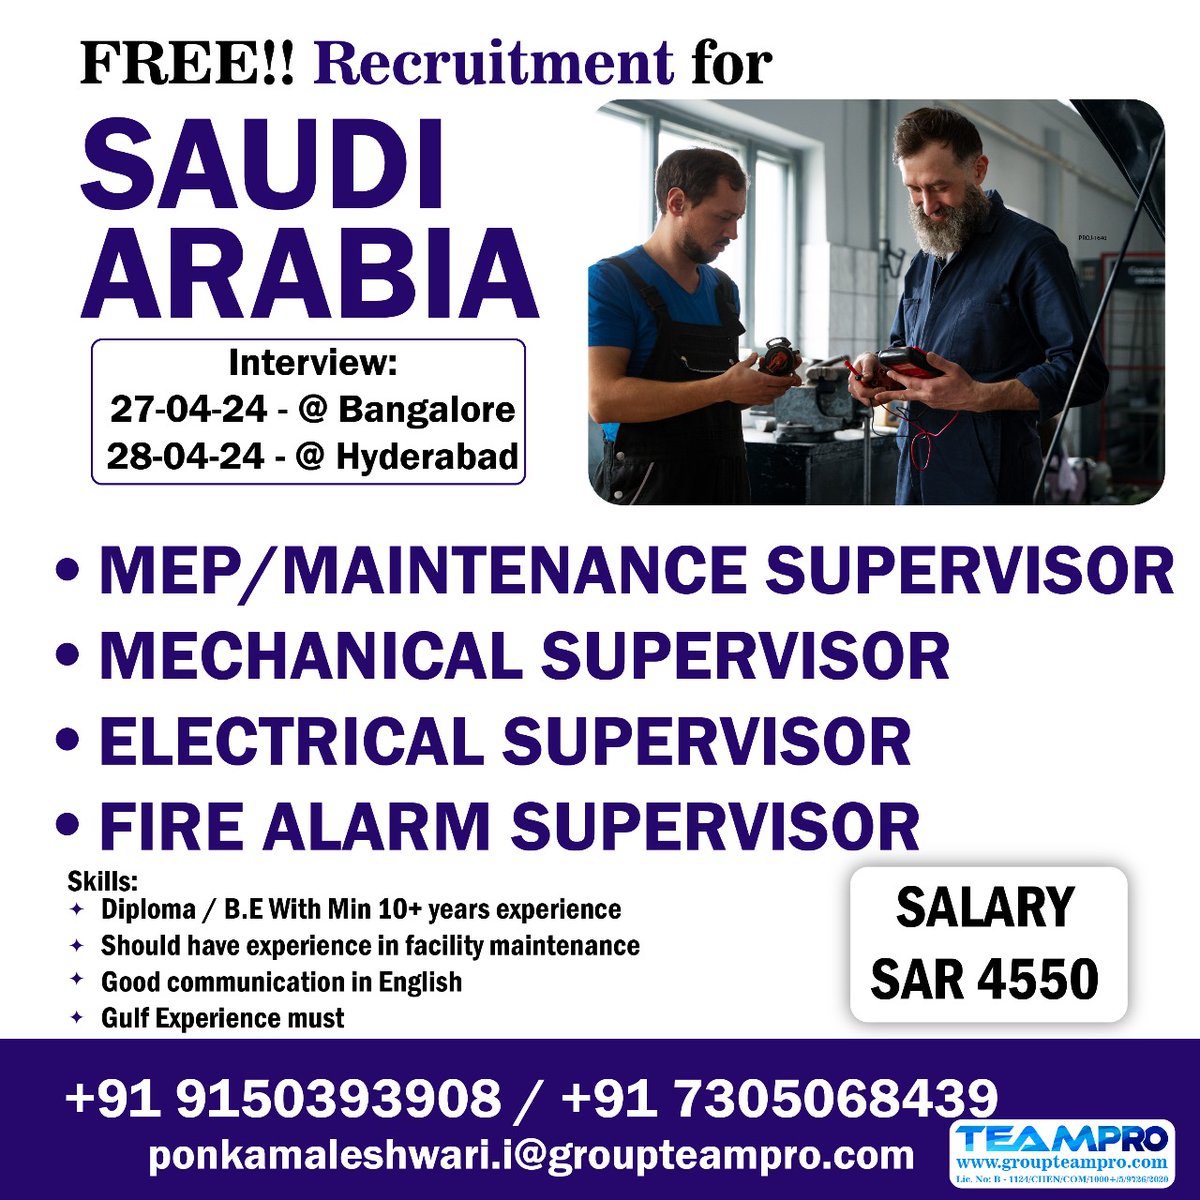 #freerecruitment #saudijobs #saudijobseekers #supervisor #electrical #mechanical #firealarm #mep #facilitymaintenance #immediatejoiners #directinterview #shortlistingunderprogress